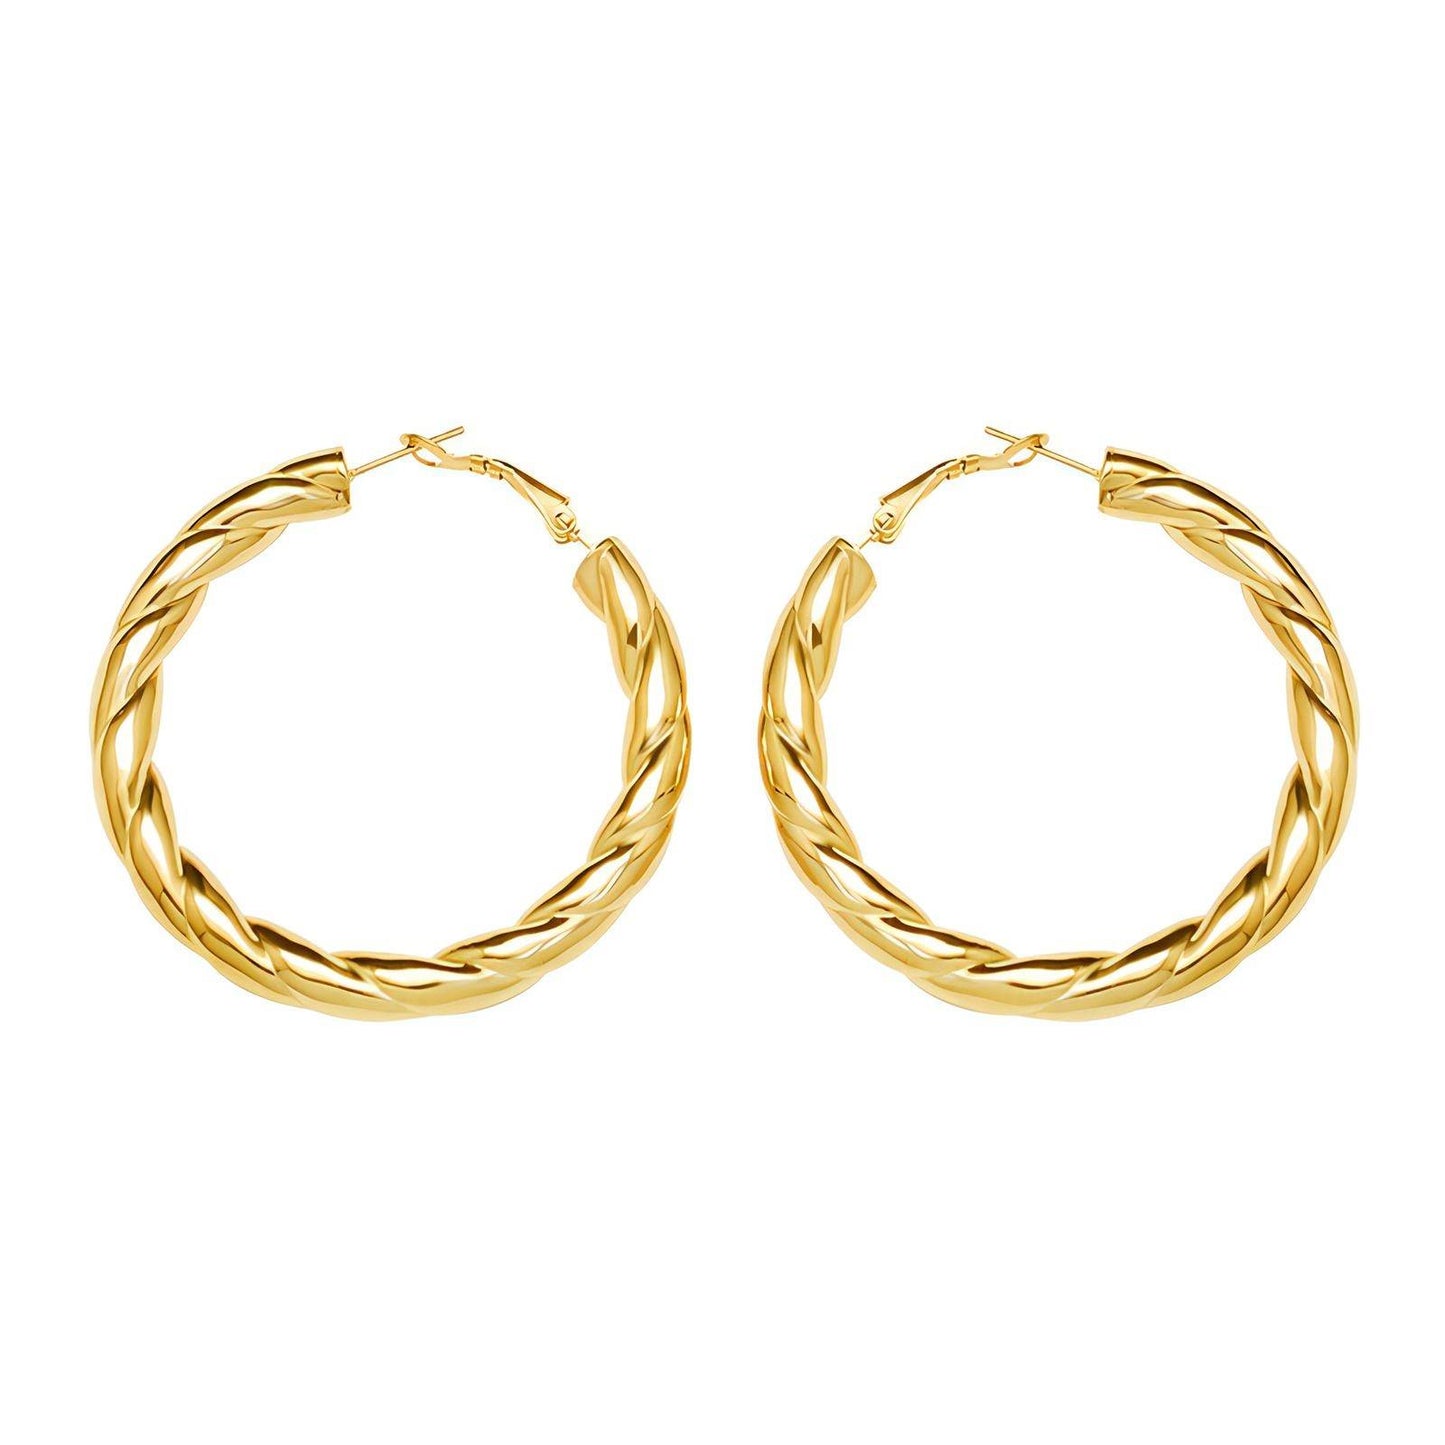 18K gold plated Stainless steel twisted hoop earrings